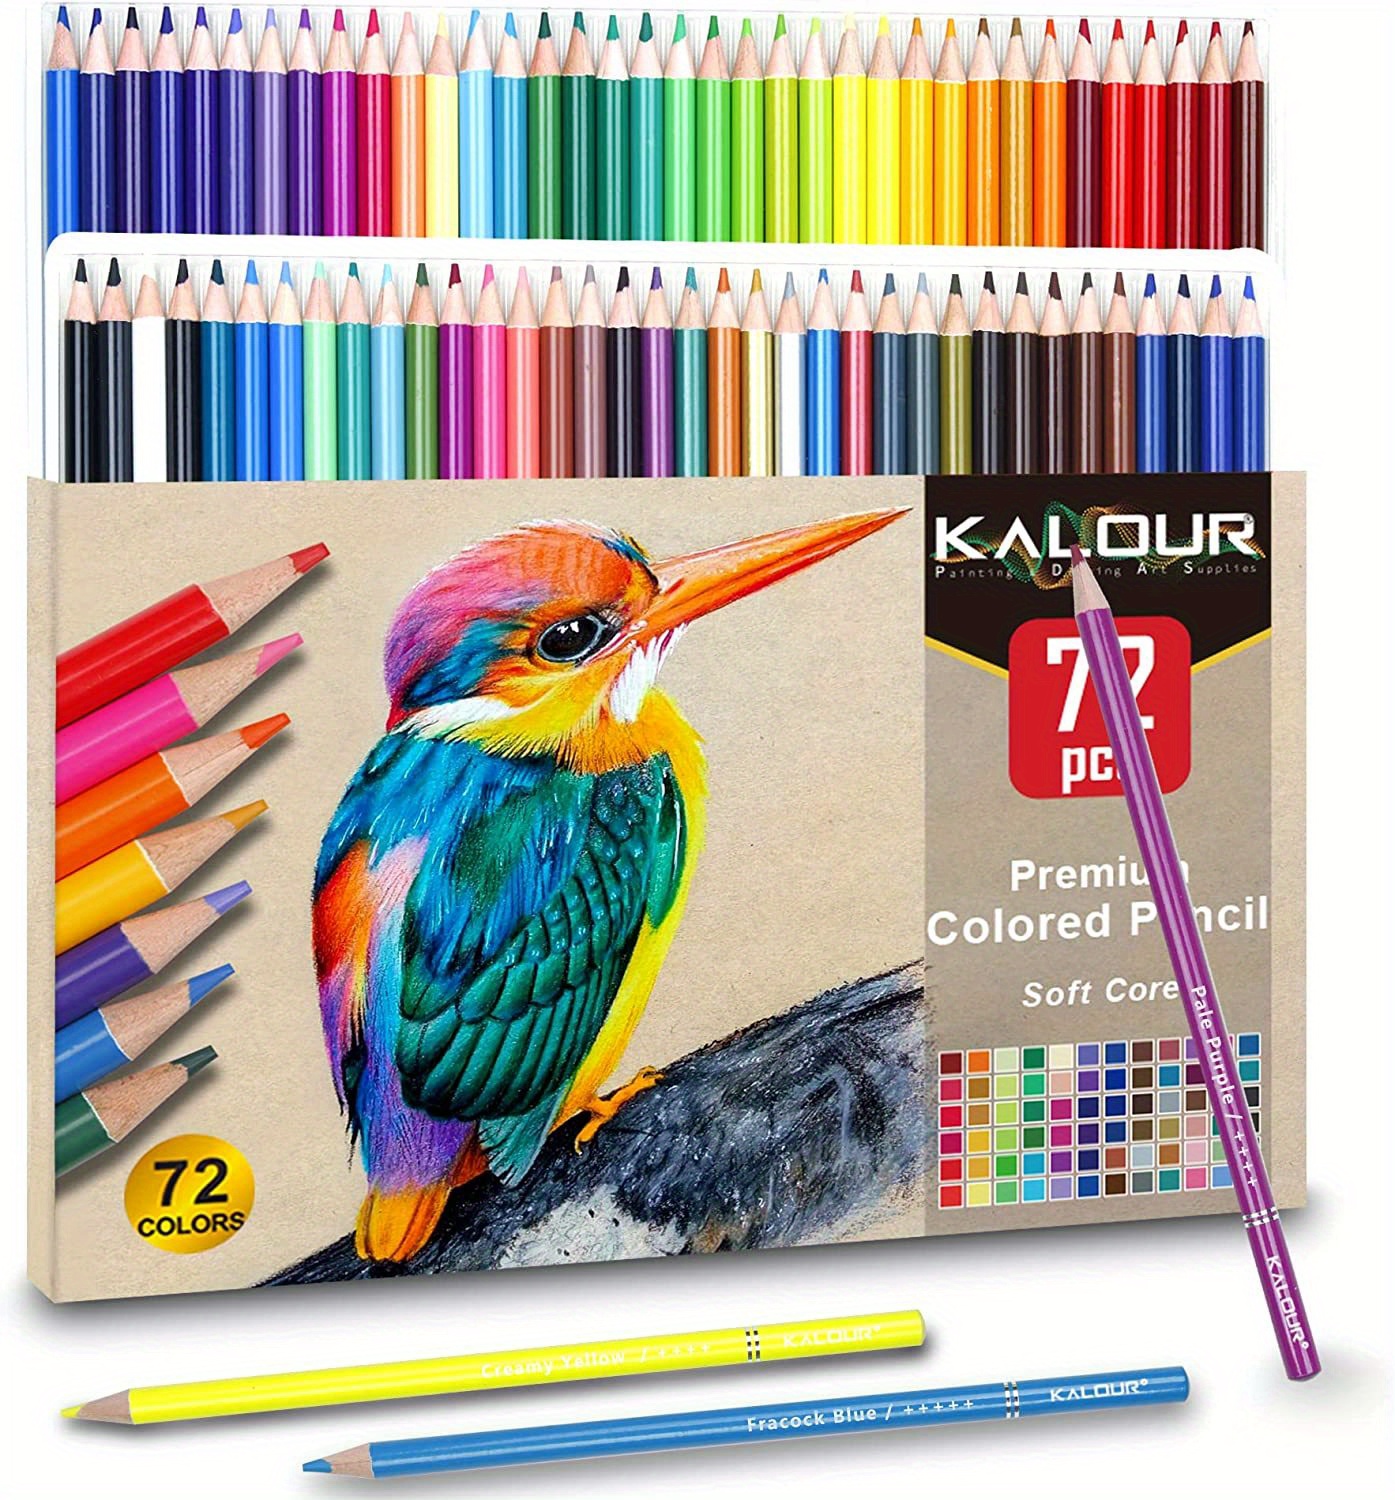 KALOUR 520 Colors Colored Pencils Set Artists Soft Core Vibrant Color  Coloring Sketching Pencils Adults Beginners